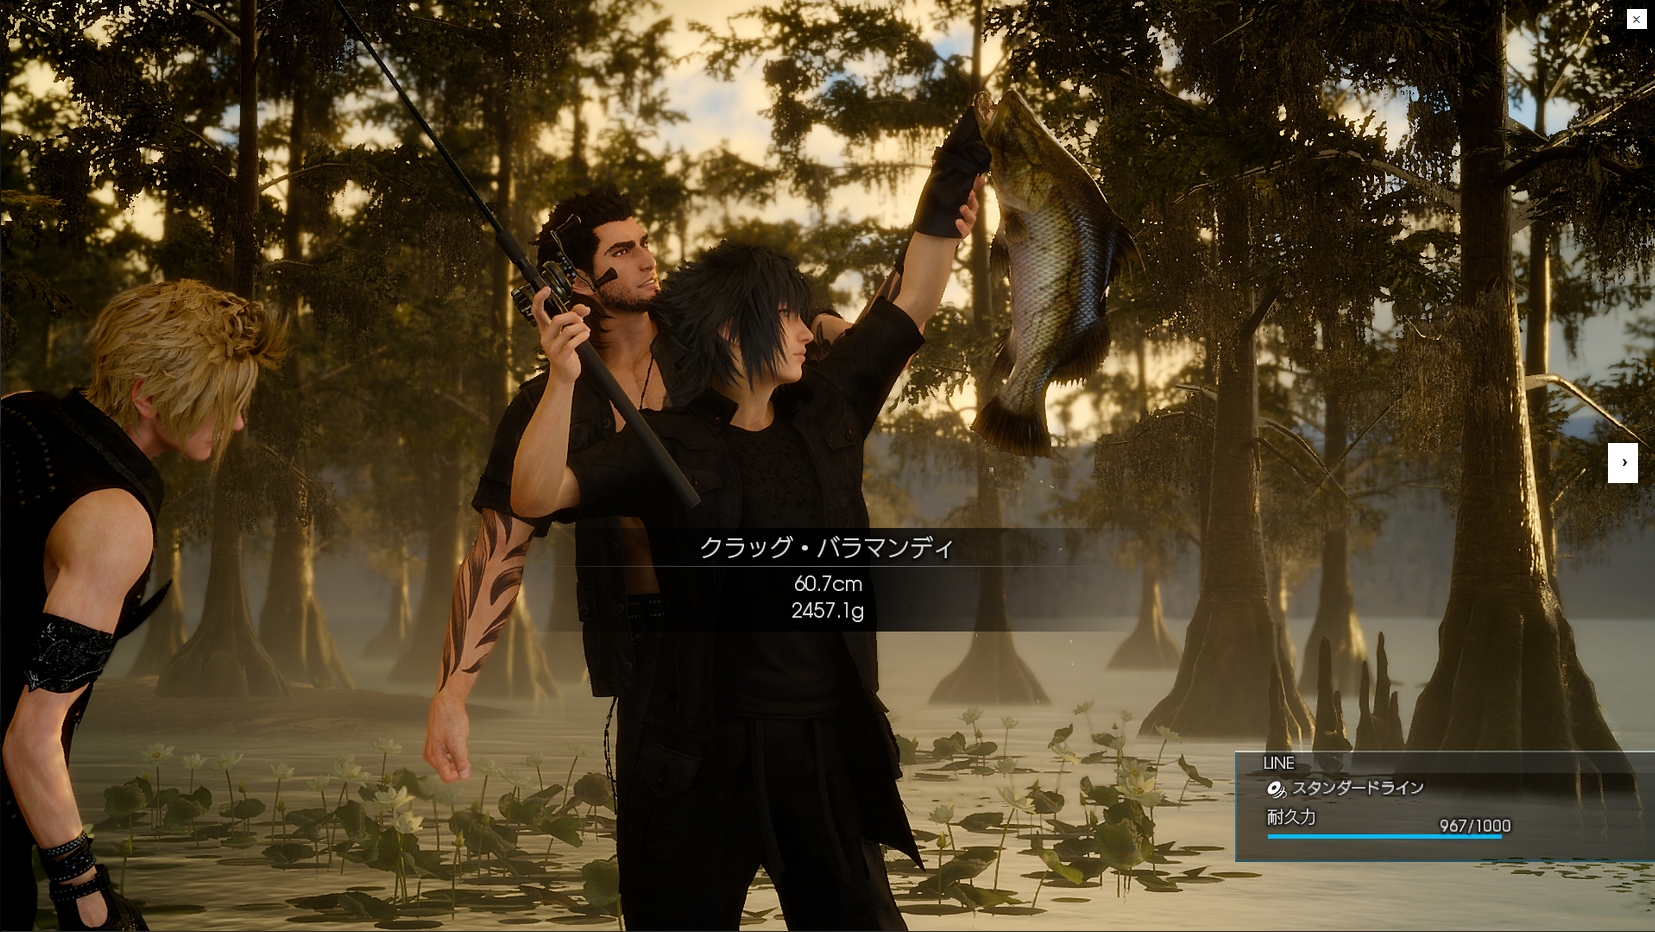 [TGS2015] Final Fantasy XV - Dawn 2.0 Trailer + Nuevas imagenes D44c8723a66d9f0f7c47c3b5c0a16ae9